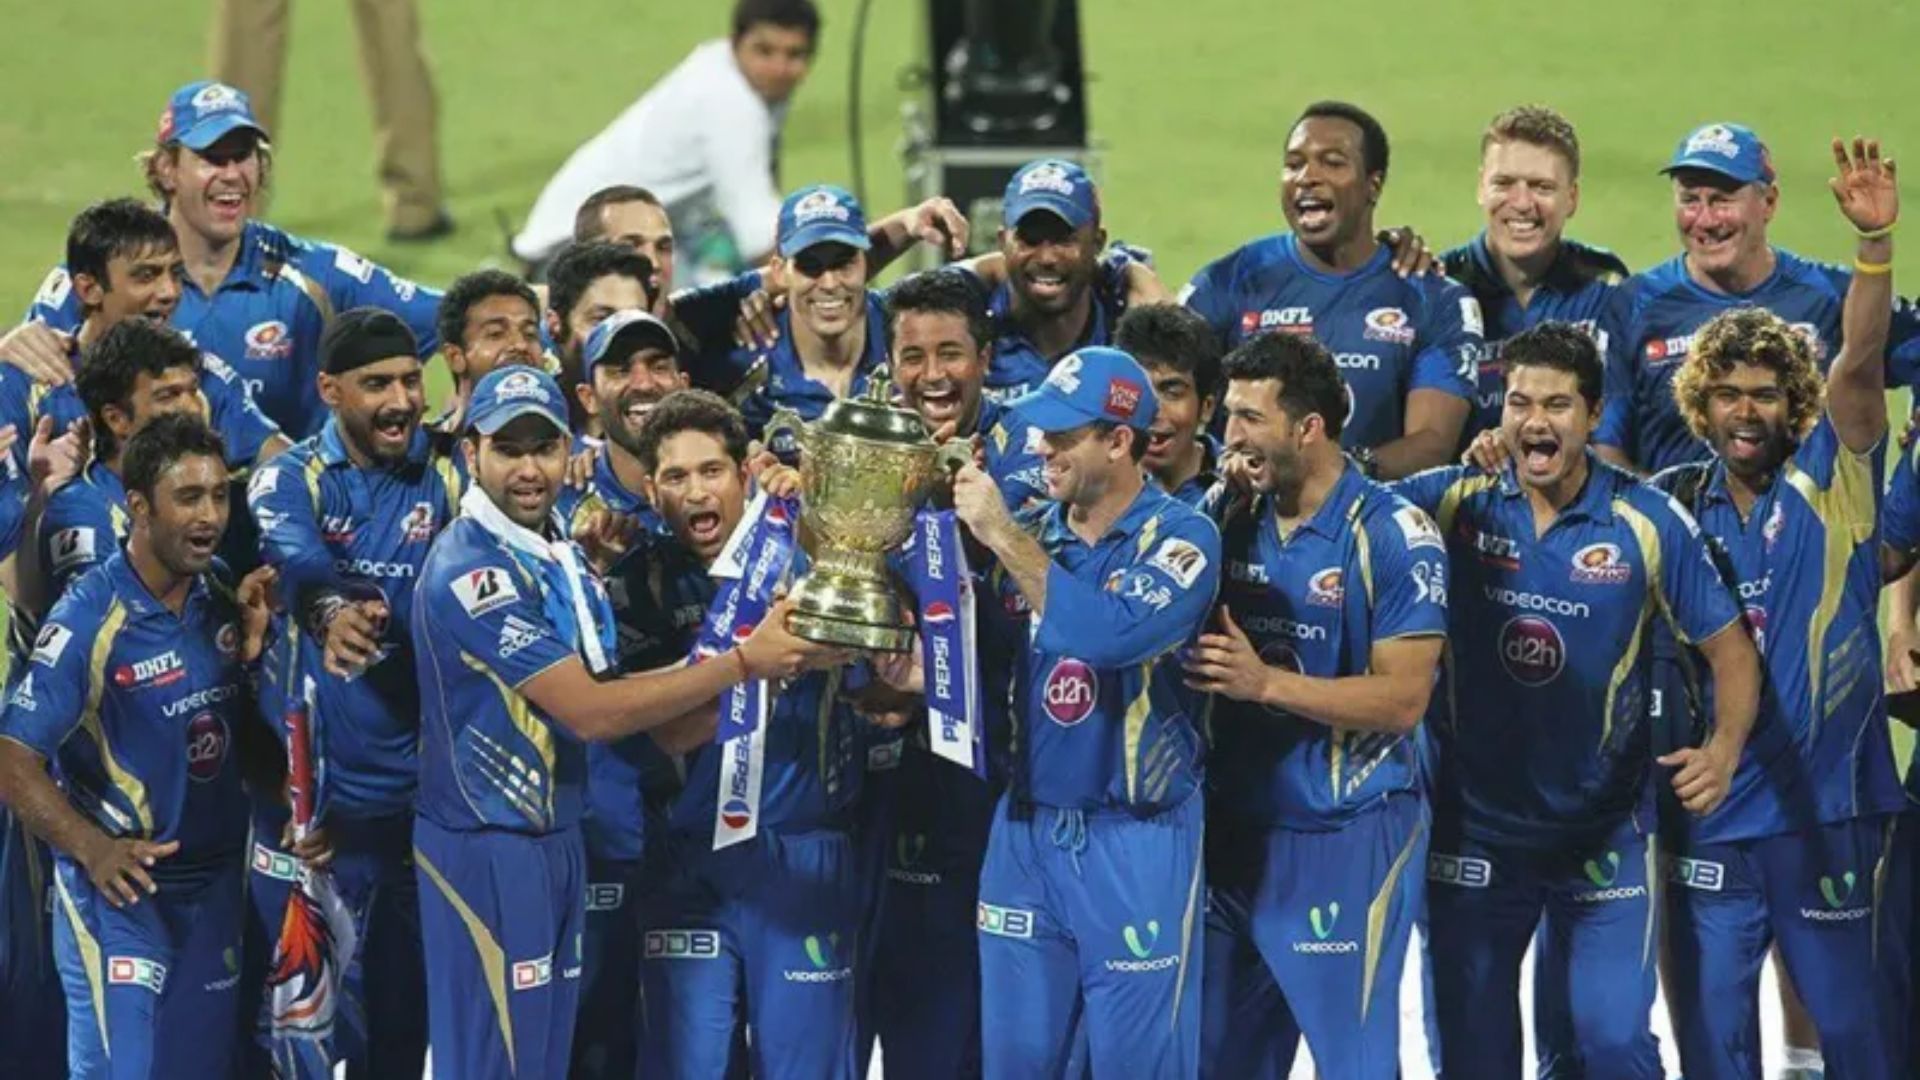 Ricky Ponting alongside Sachin Tendulkar and Rohit Sharma lifting IPL 2013 trophy